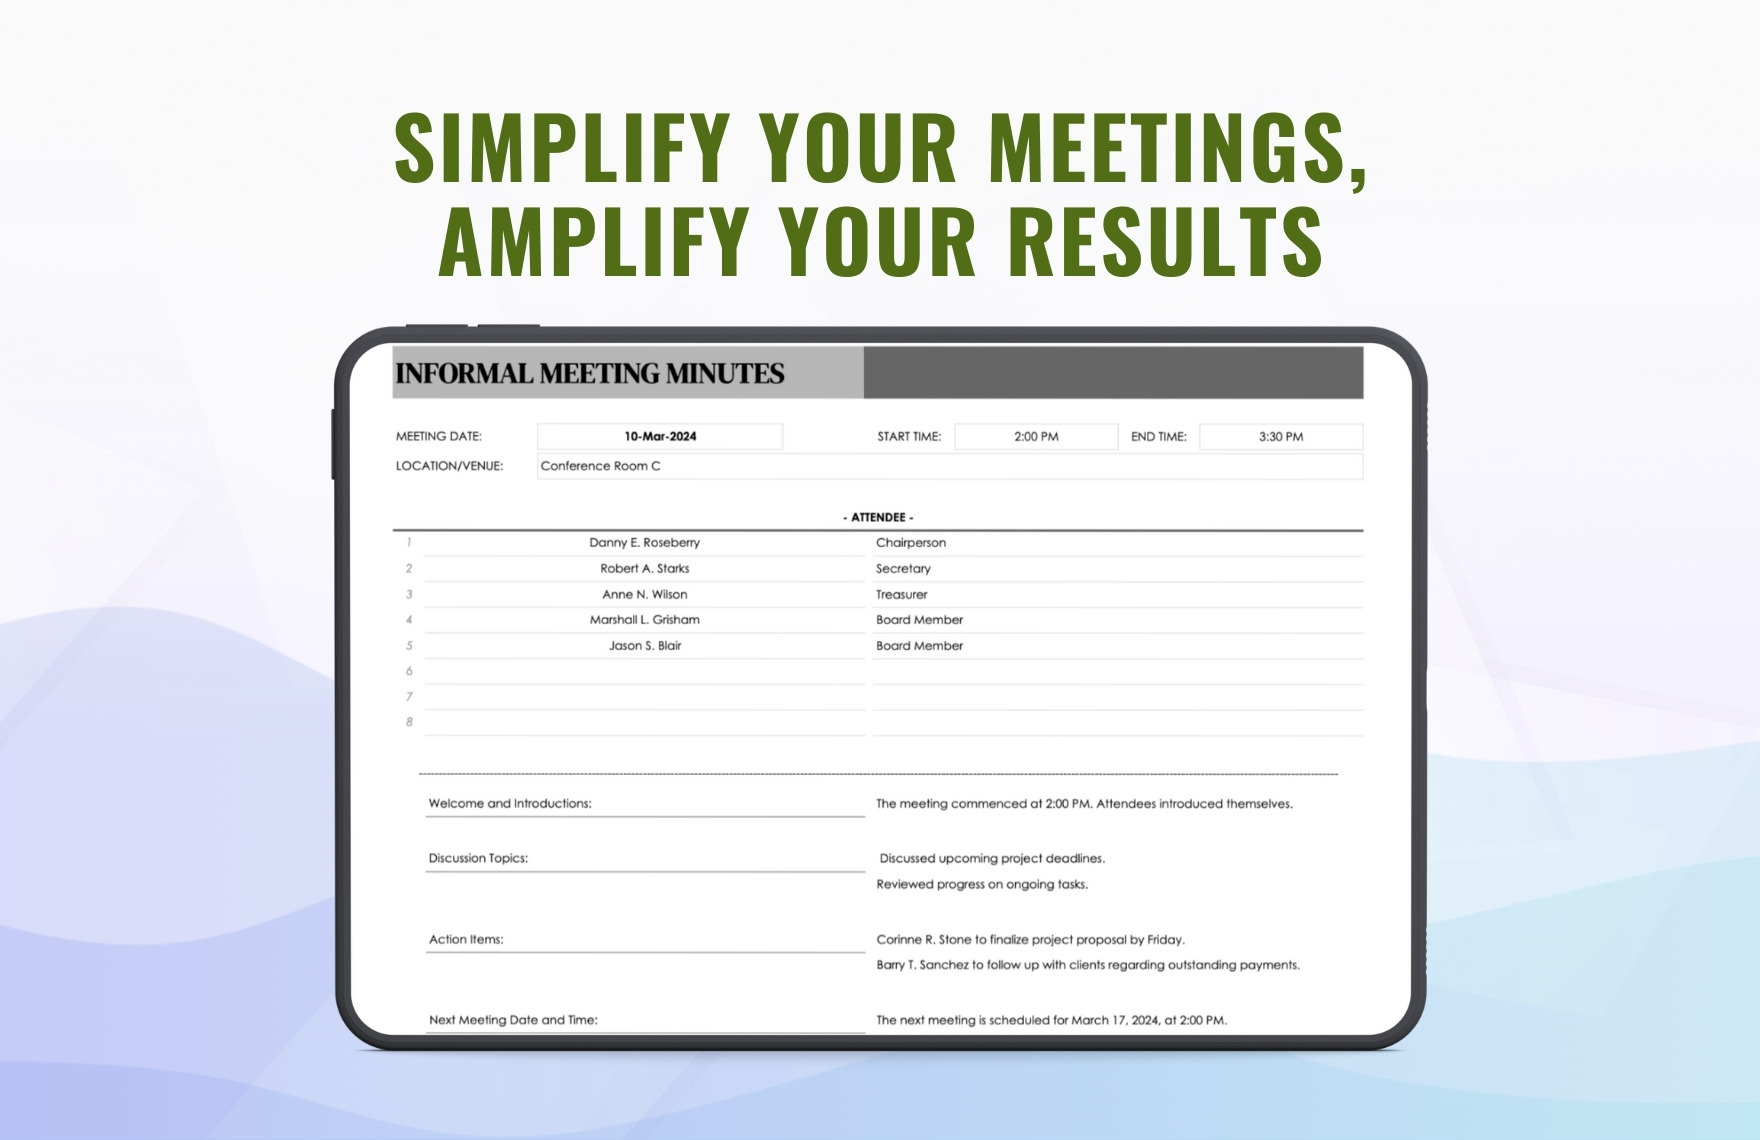 Informal Meeting Minutes Template